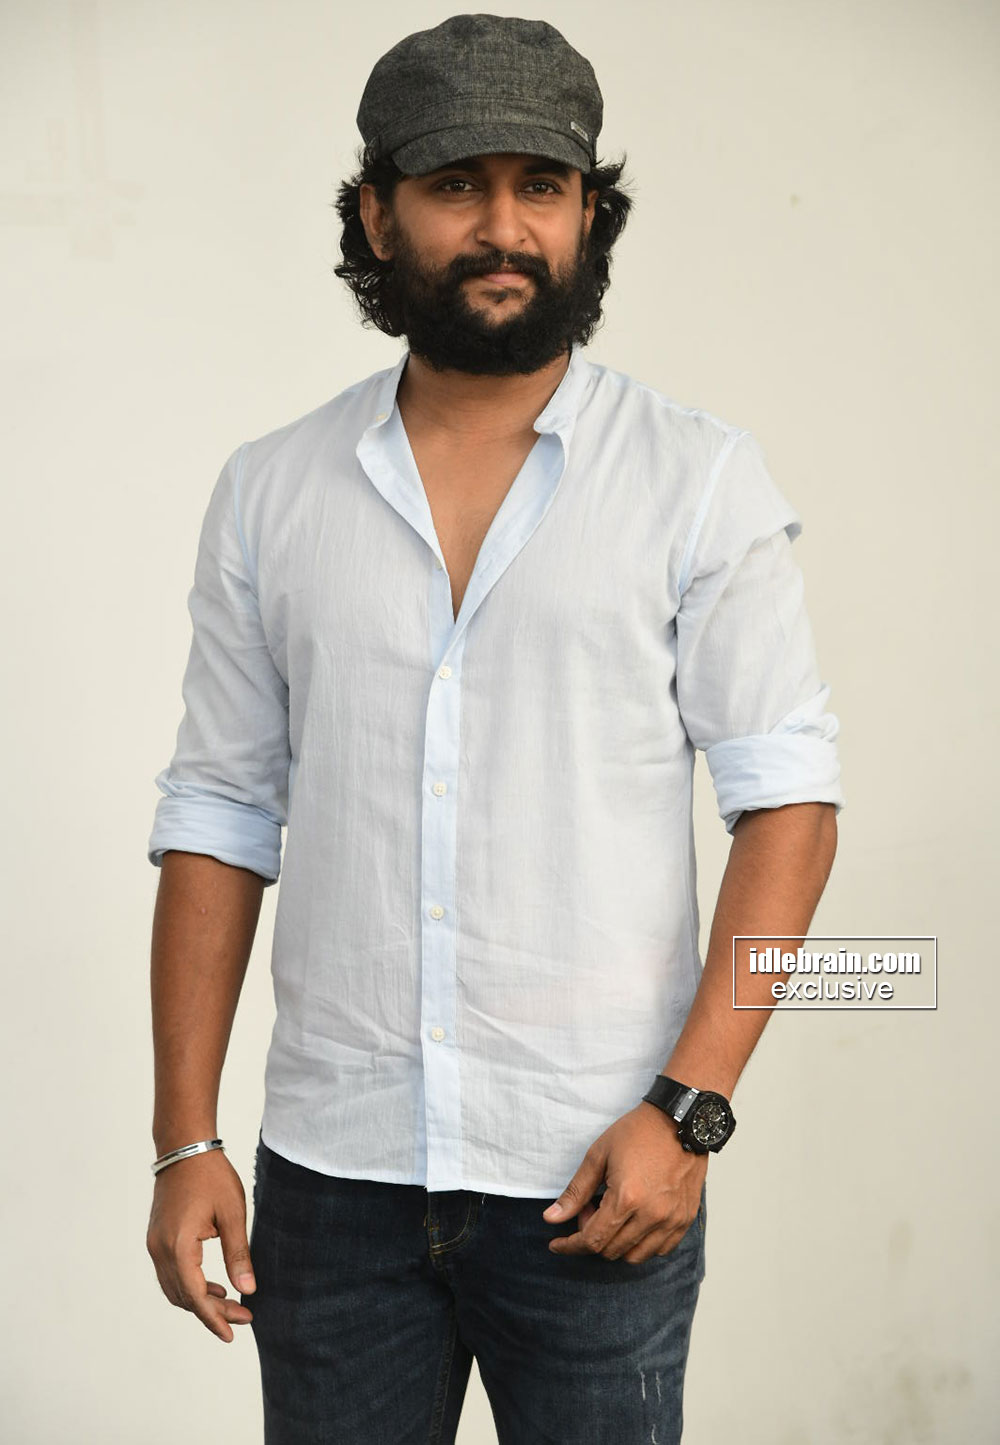 Nani photo gallery - Telugu film actor